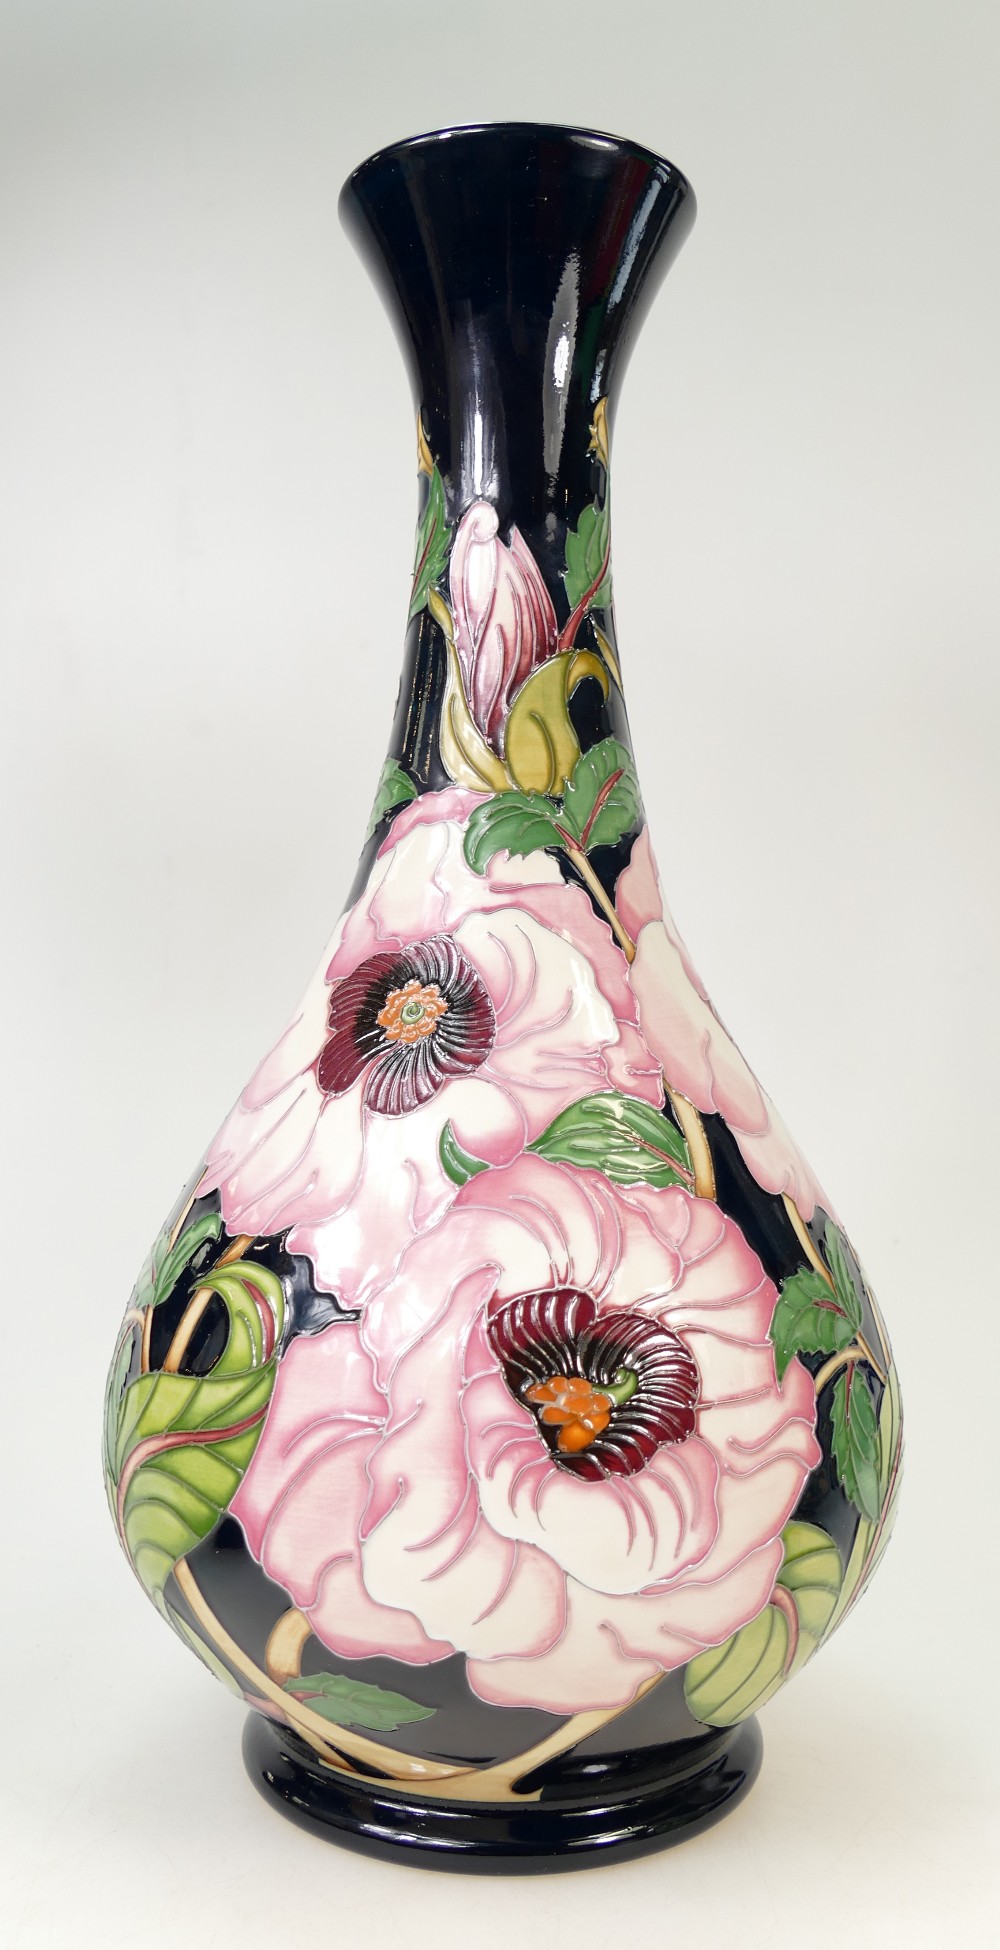 Moorcroft Addendum Dance vase: A large Moorcroft vase - 41cm in height, limited edition 38/40, - Image 3 of 3